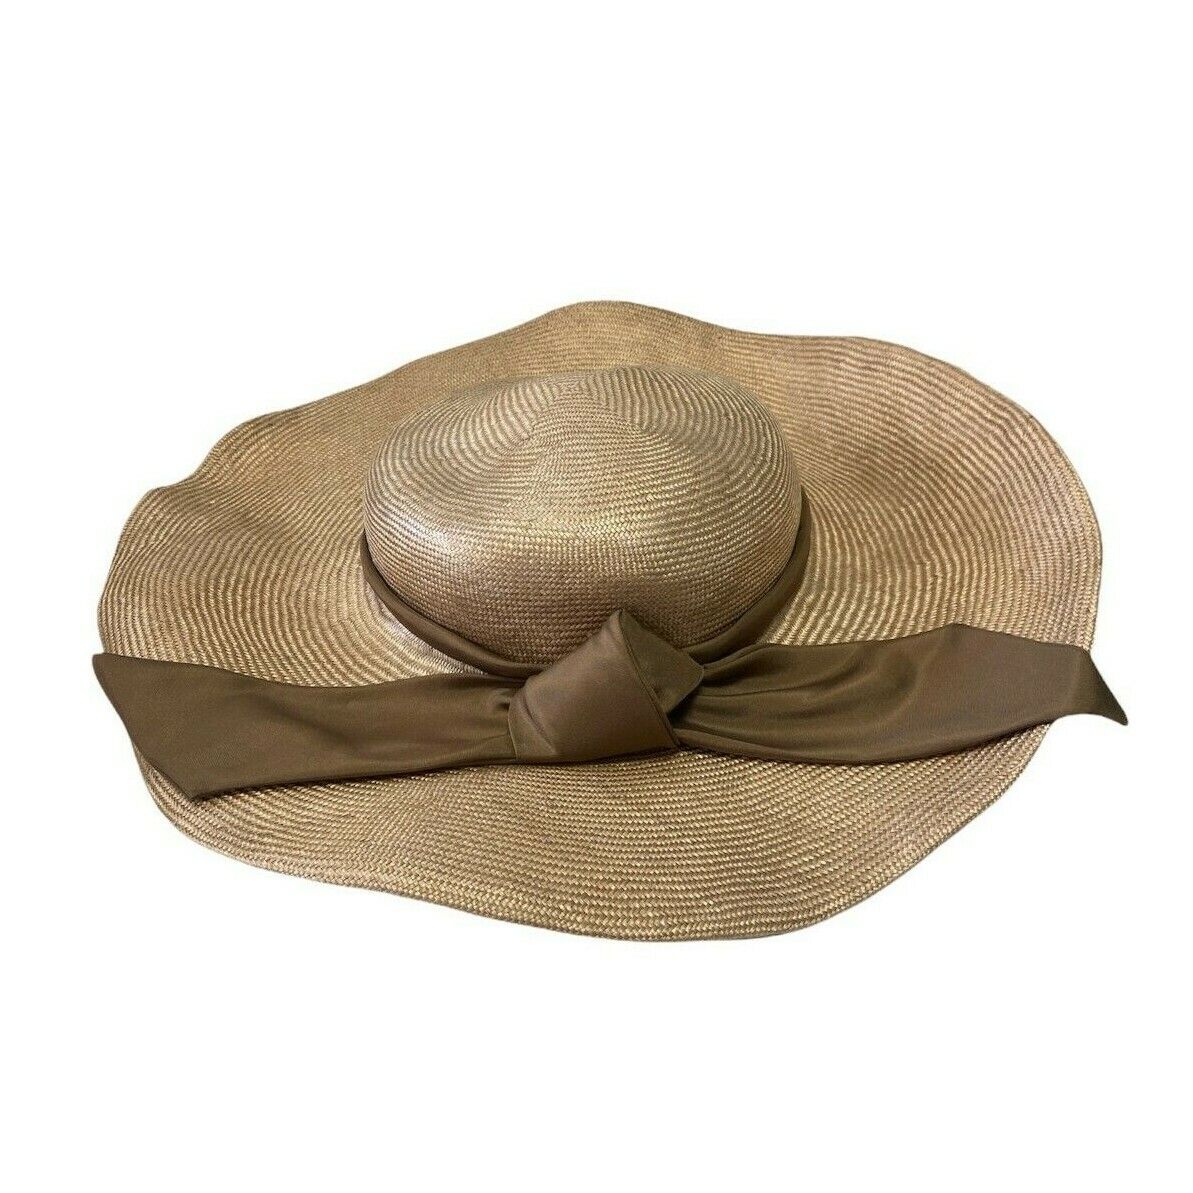 Hat - Dalbet women's hat